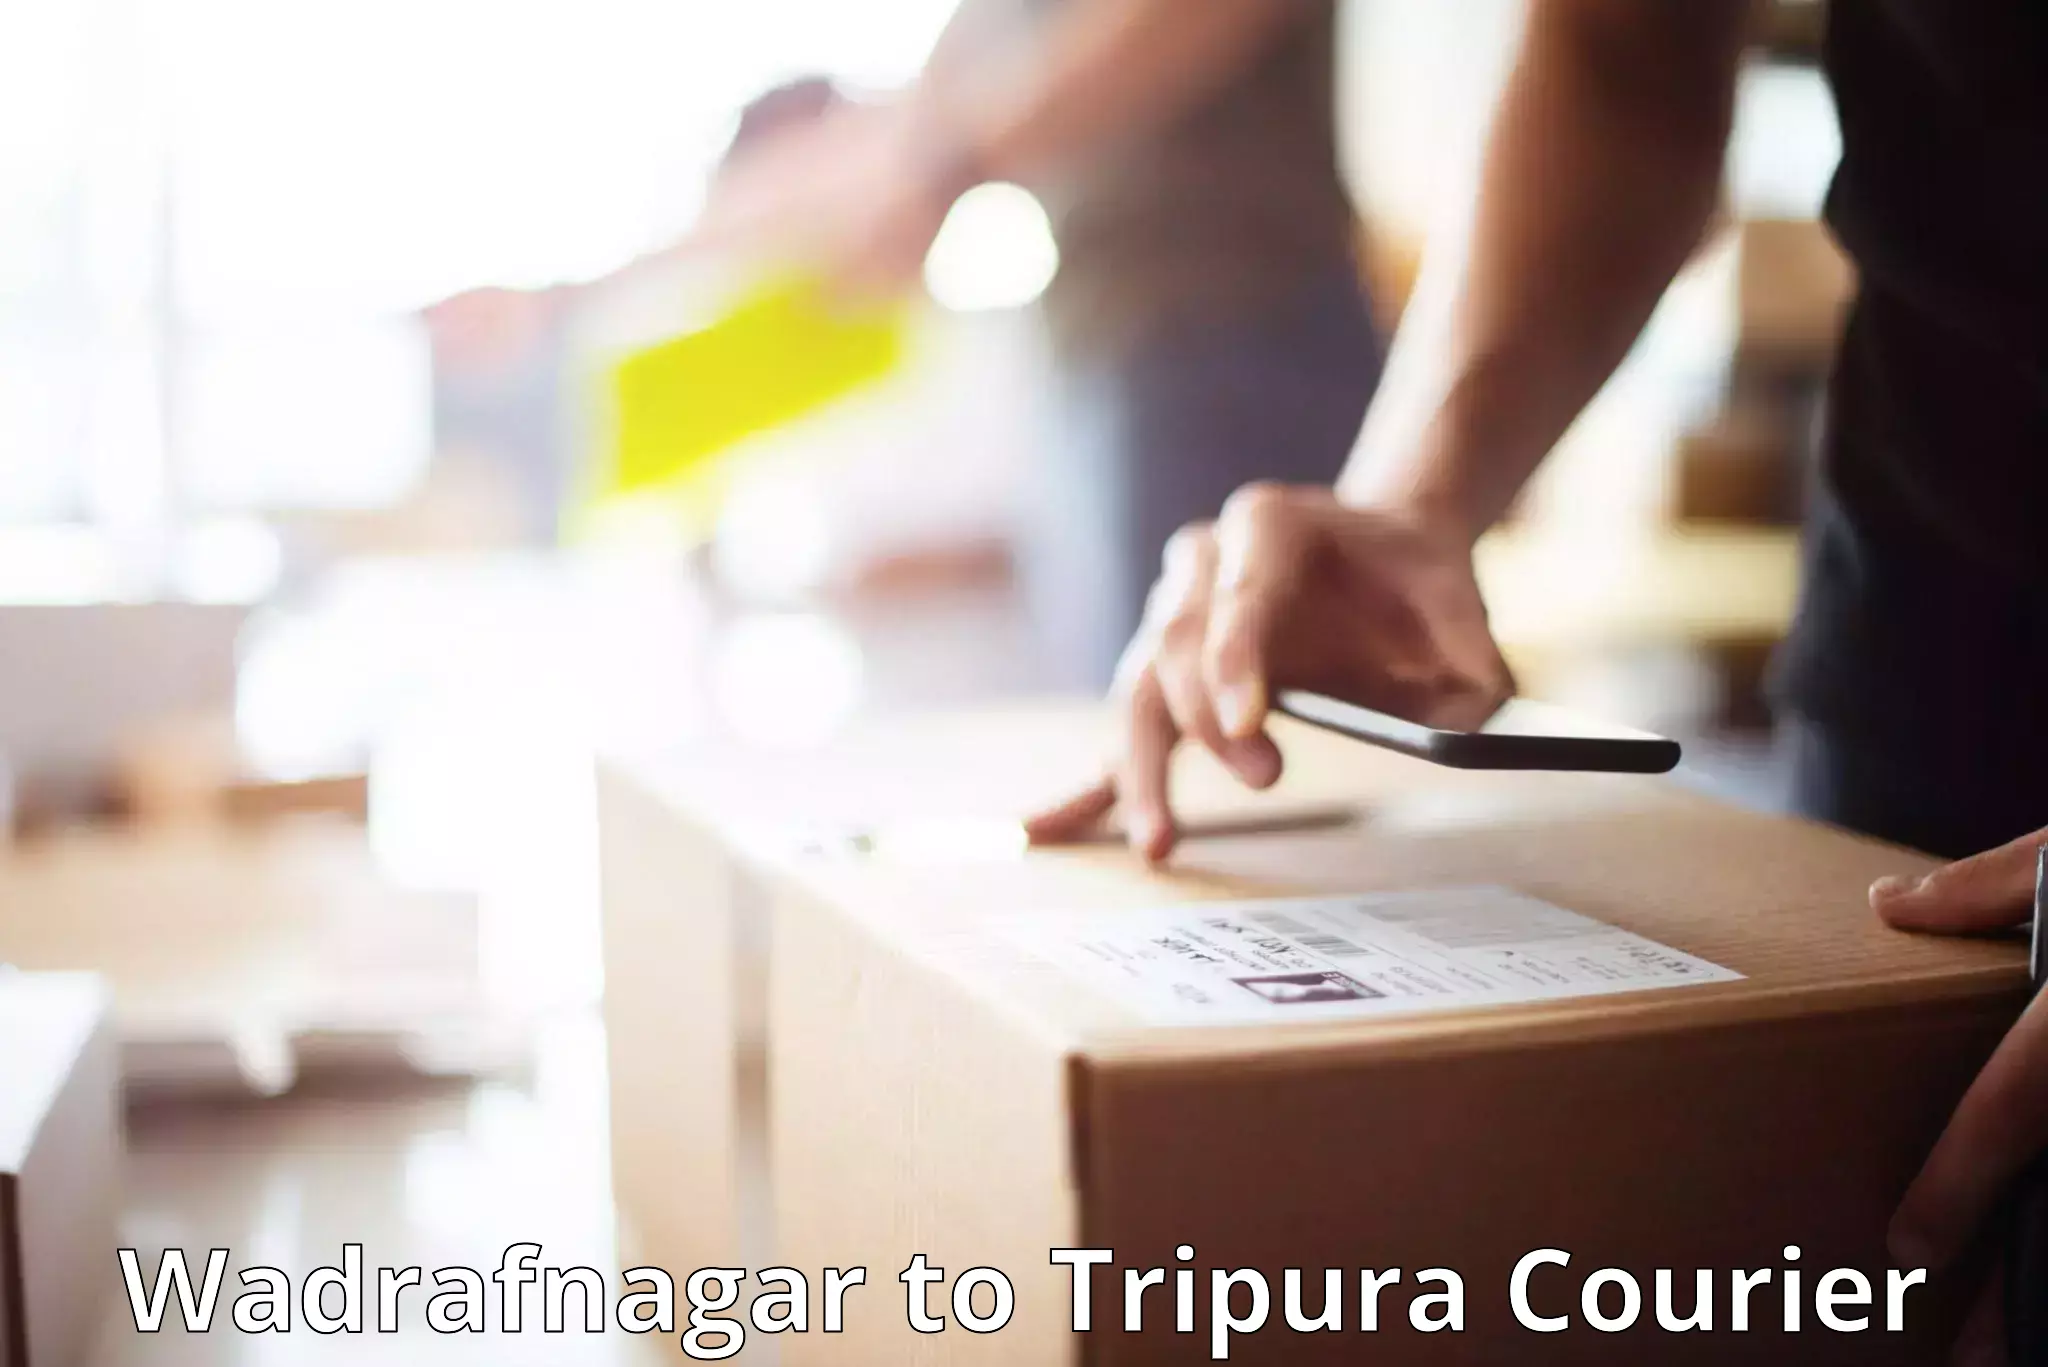 Hassle-free luggage shipping Wadrafnagar to Tripura